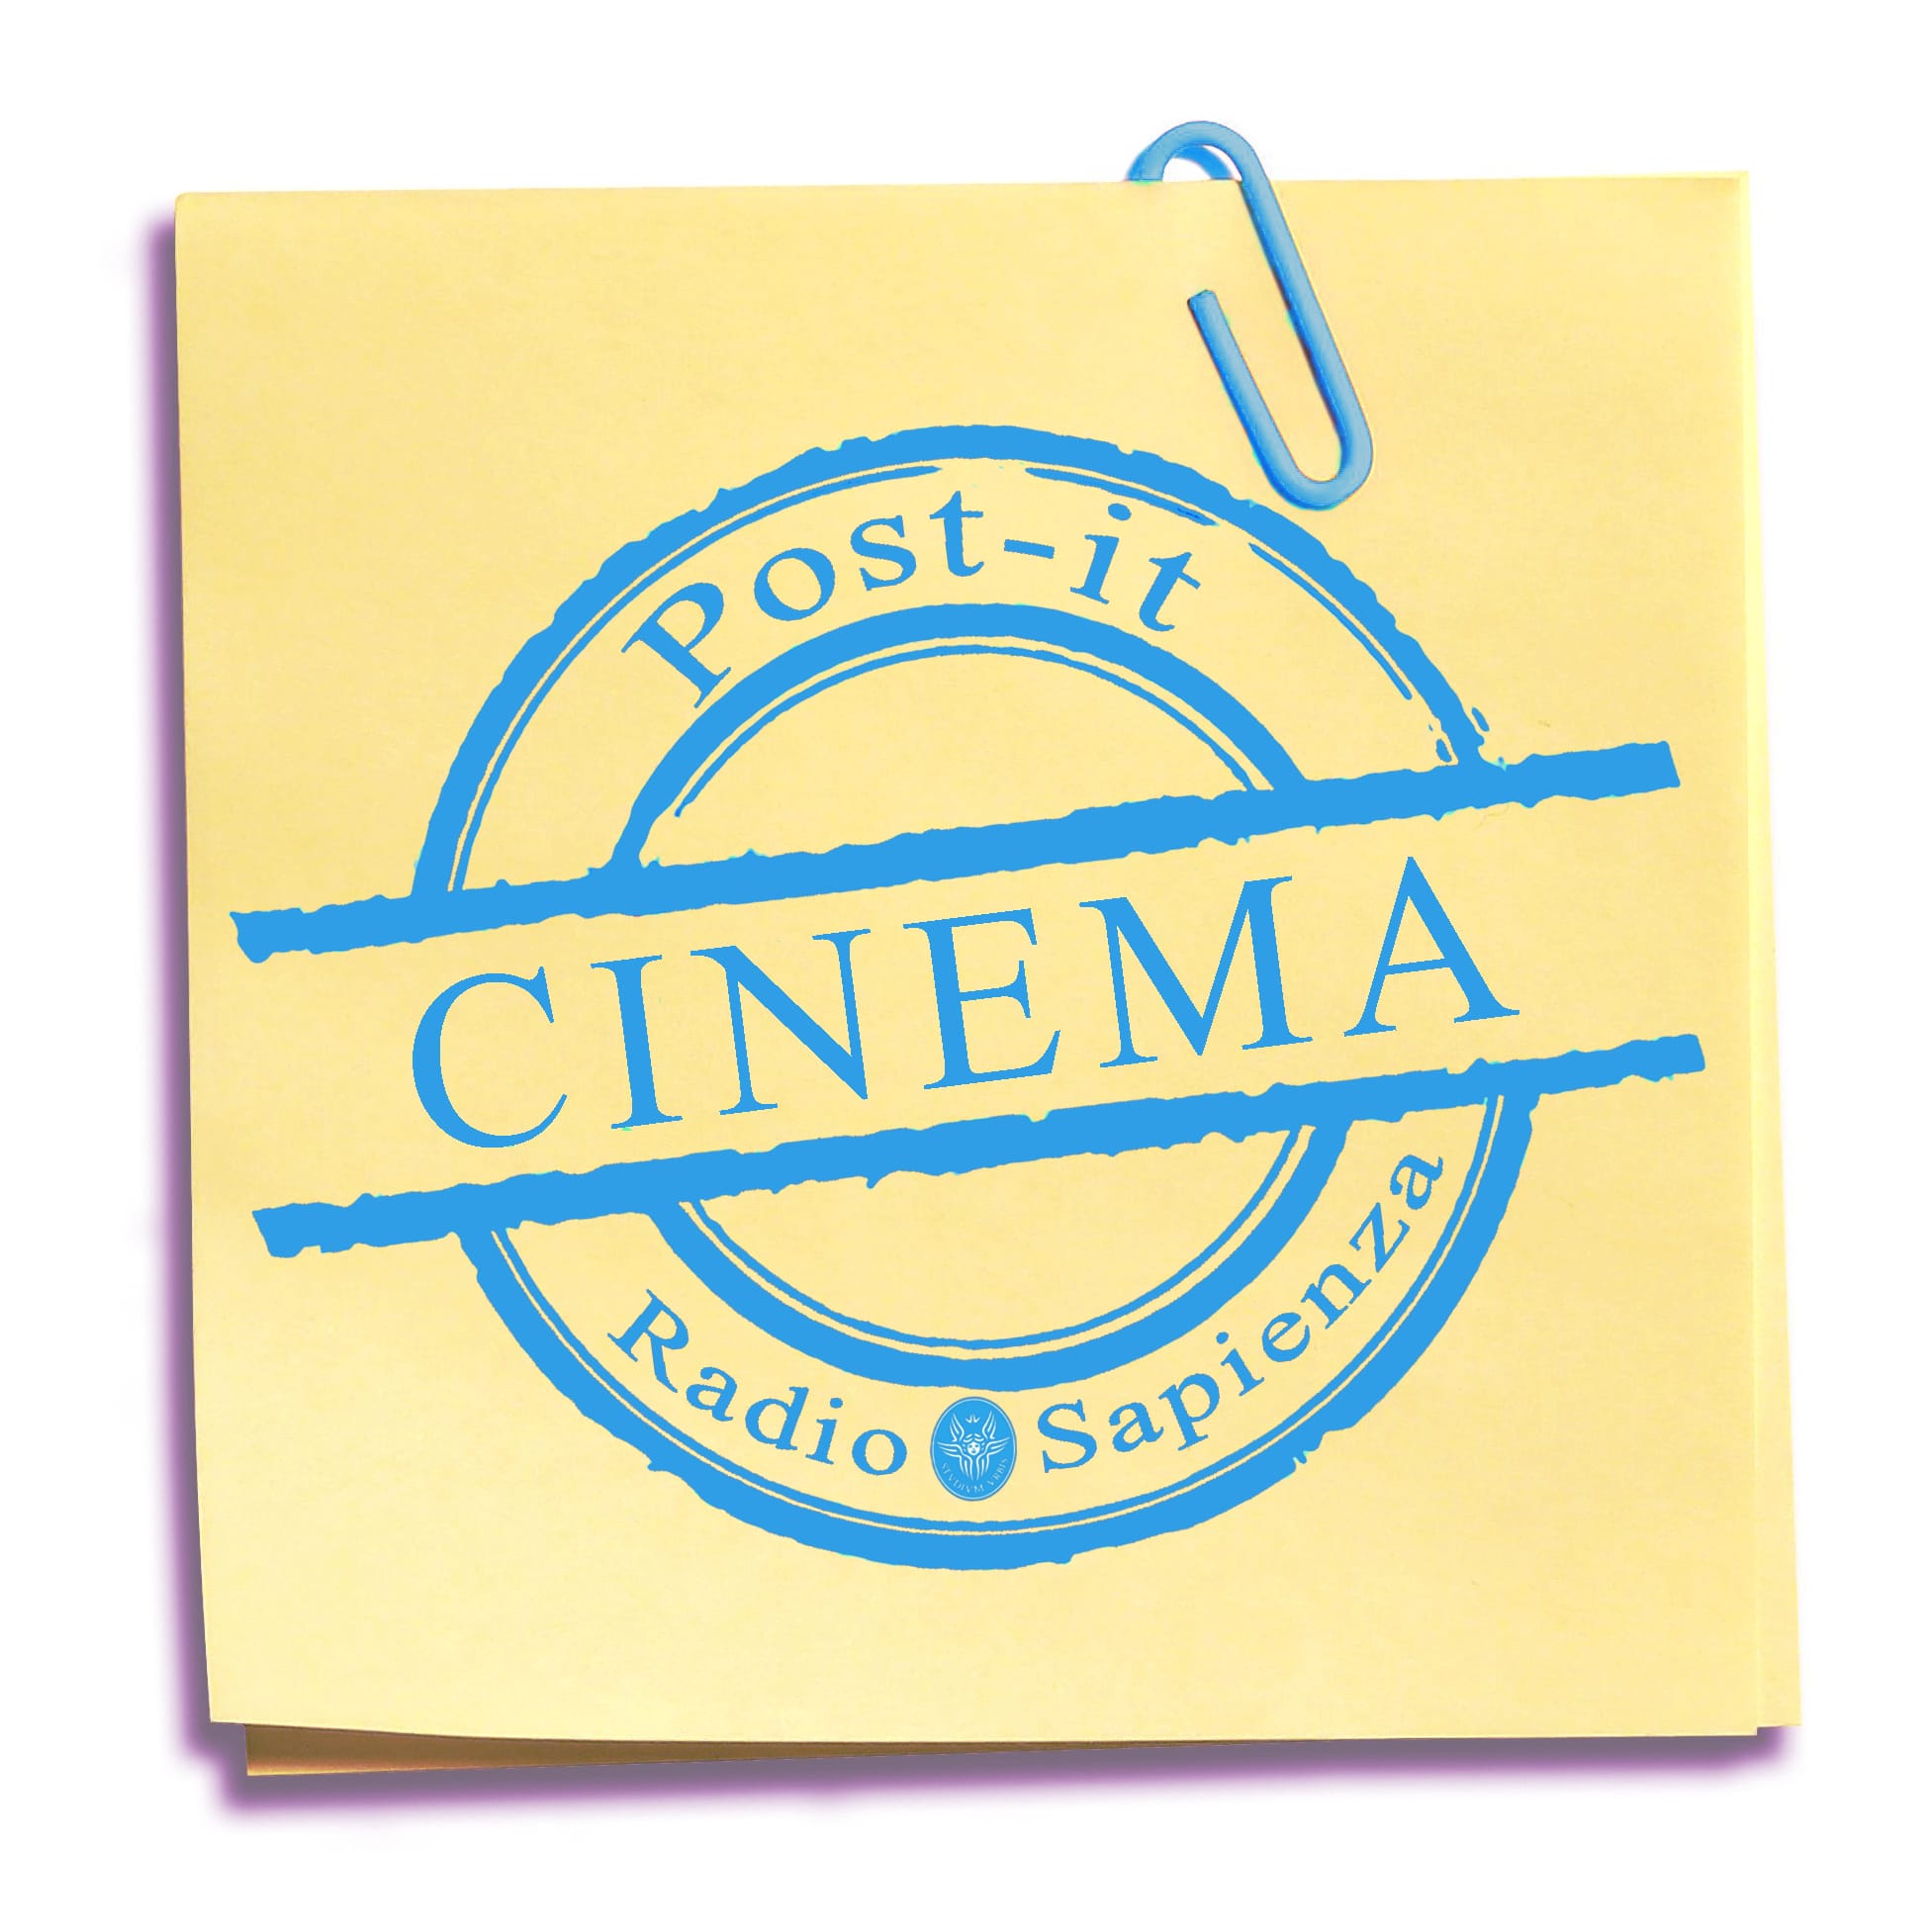 Post-It Cinema – Mercoledì 6 aprile